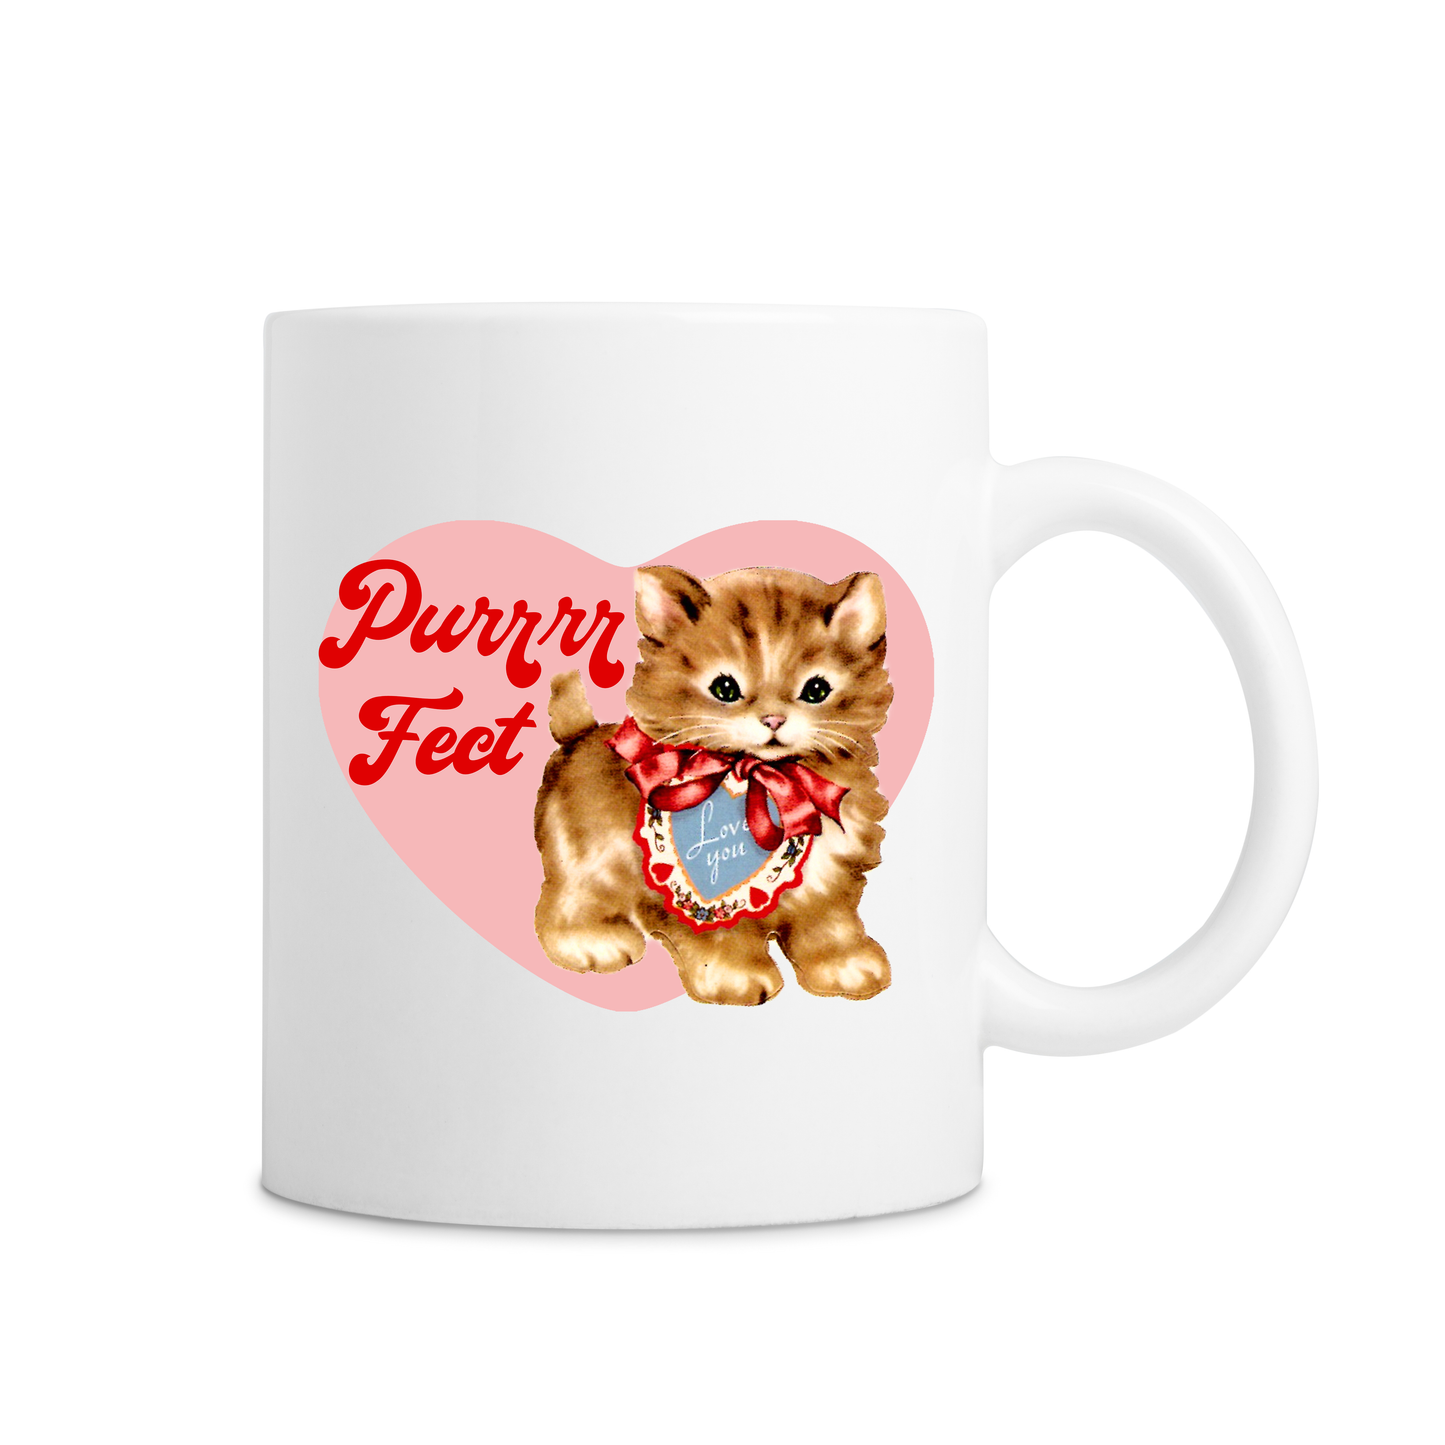 Perrrrfect Tabby Cat Love Mug - White